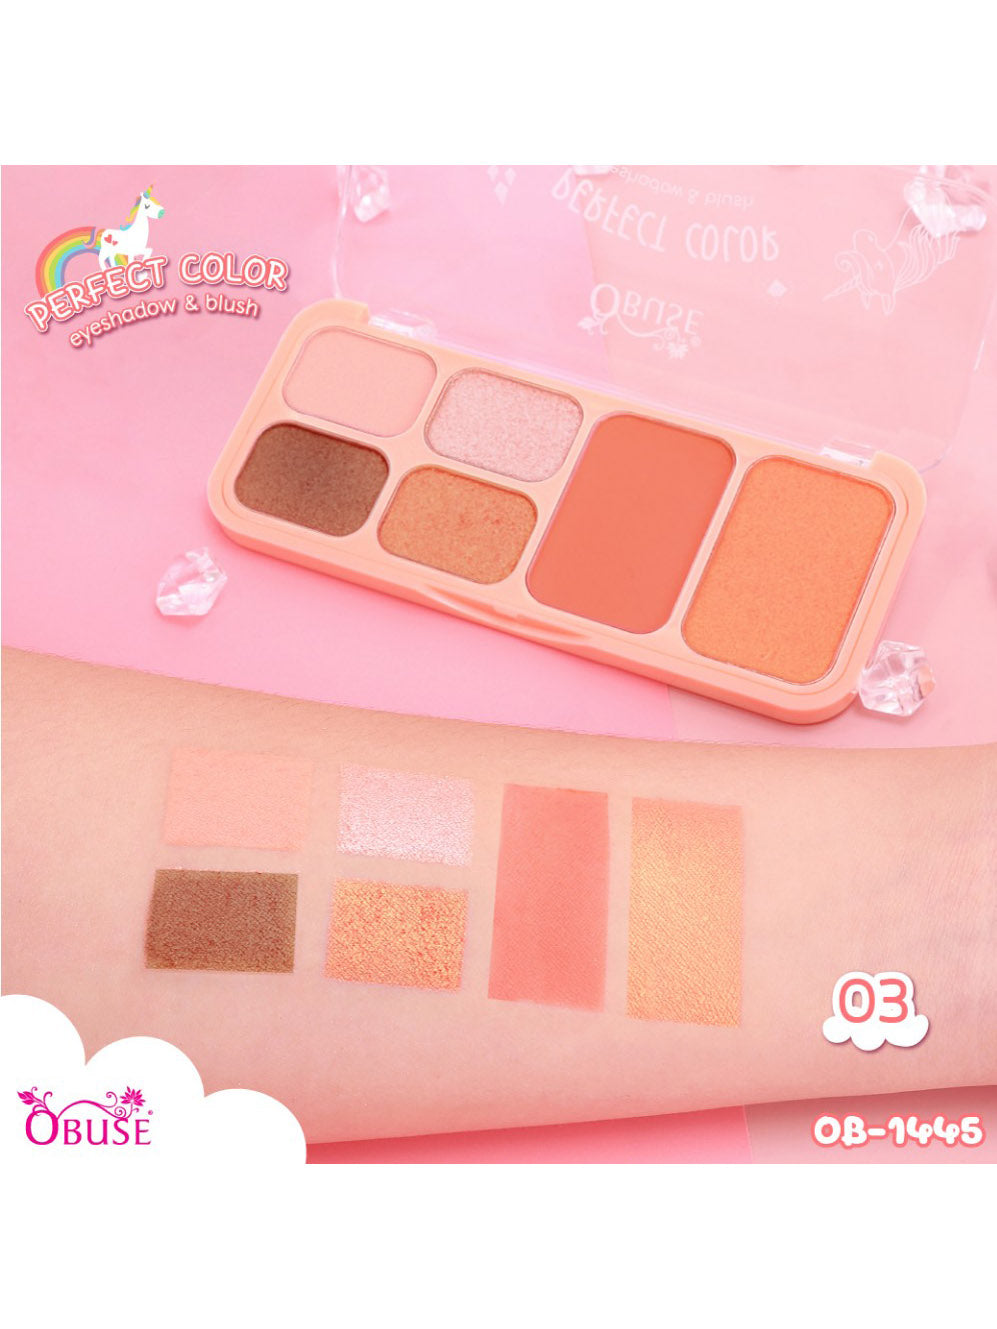 Obuse Perfect Color Eyeshadow & Blush 14.8G 1445-03 (Thai)